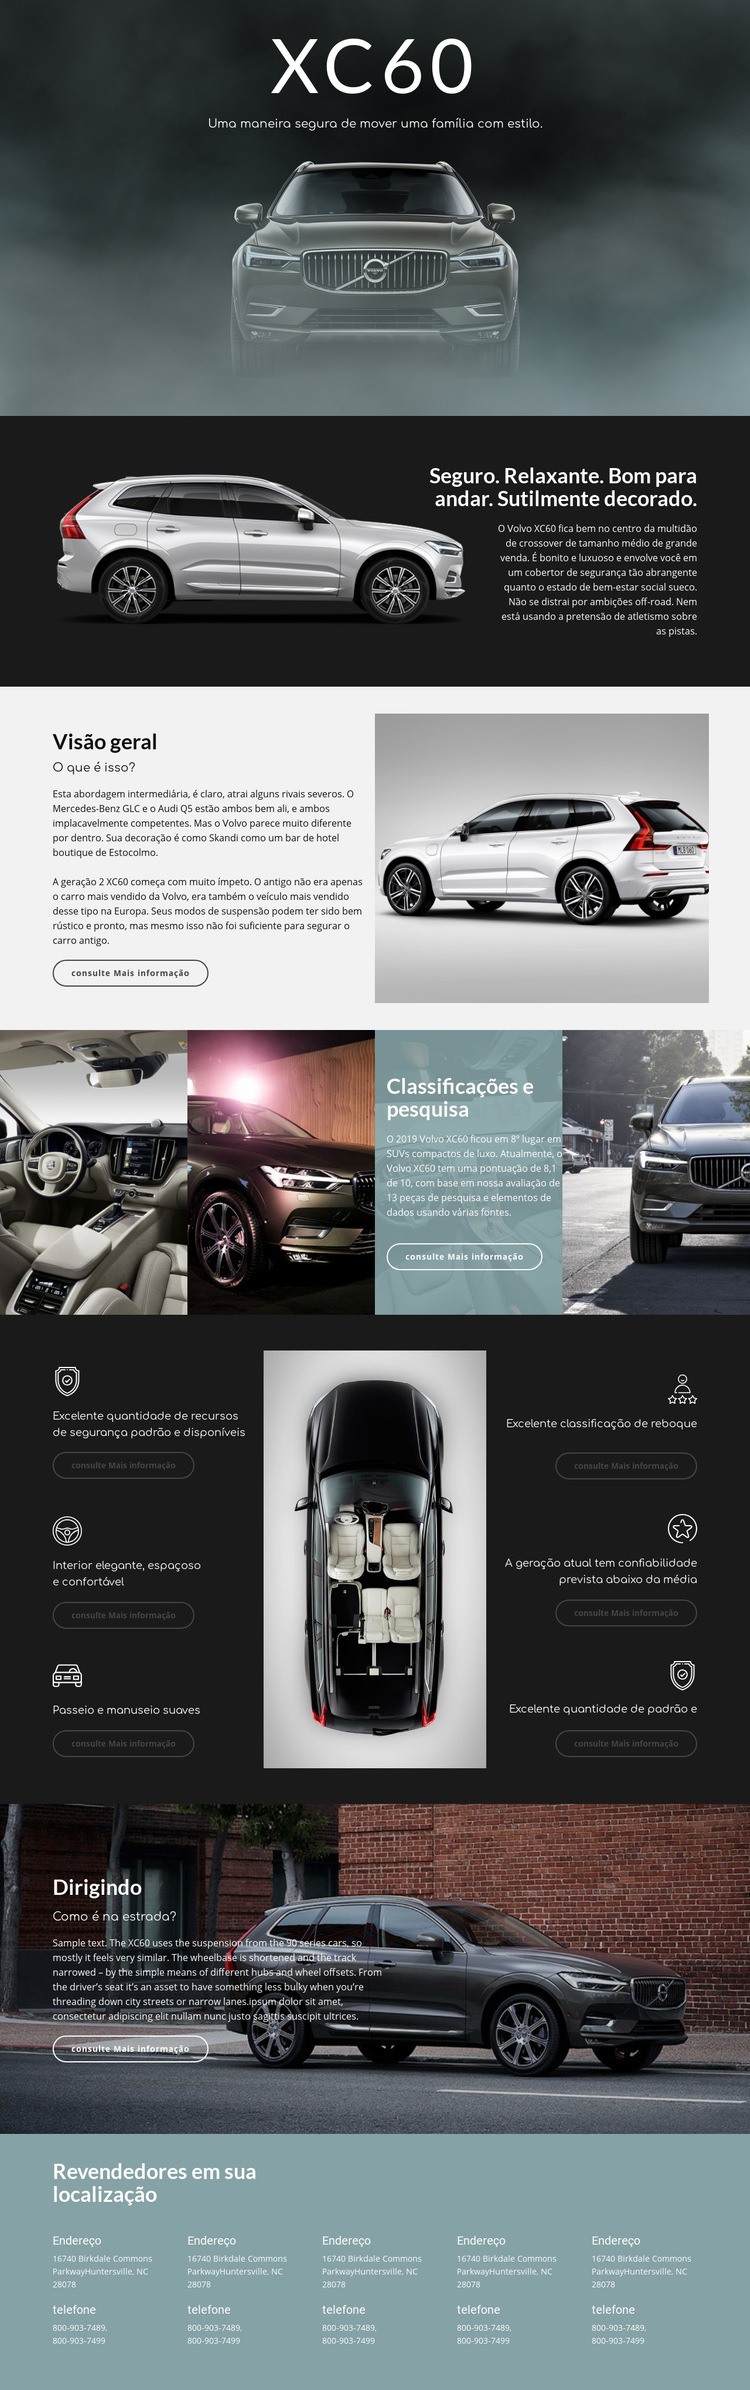 Volvo Design do site